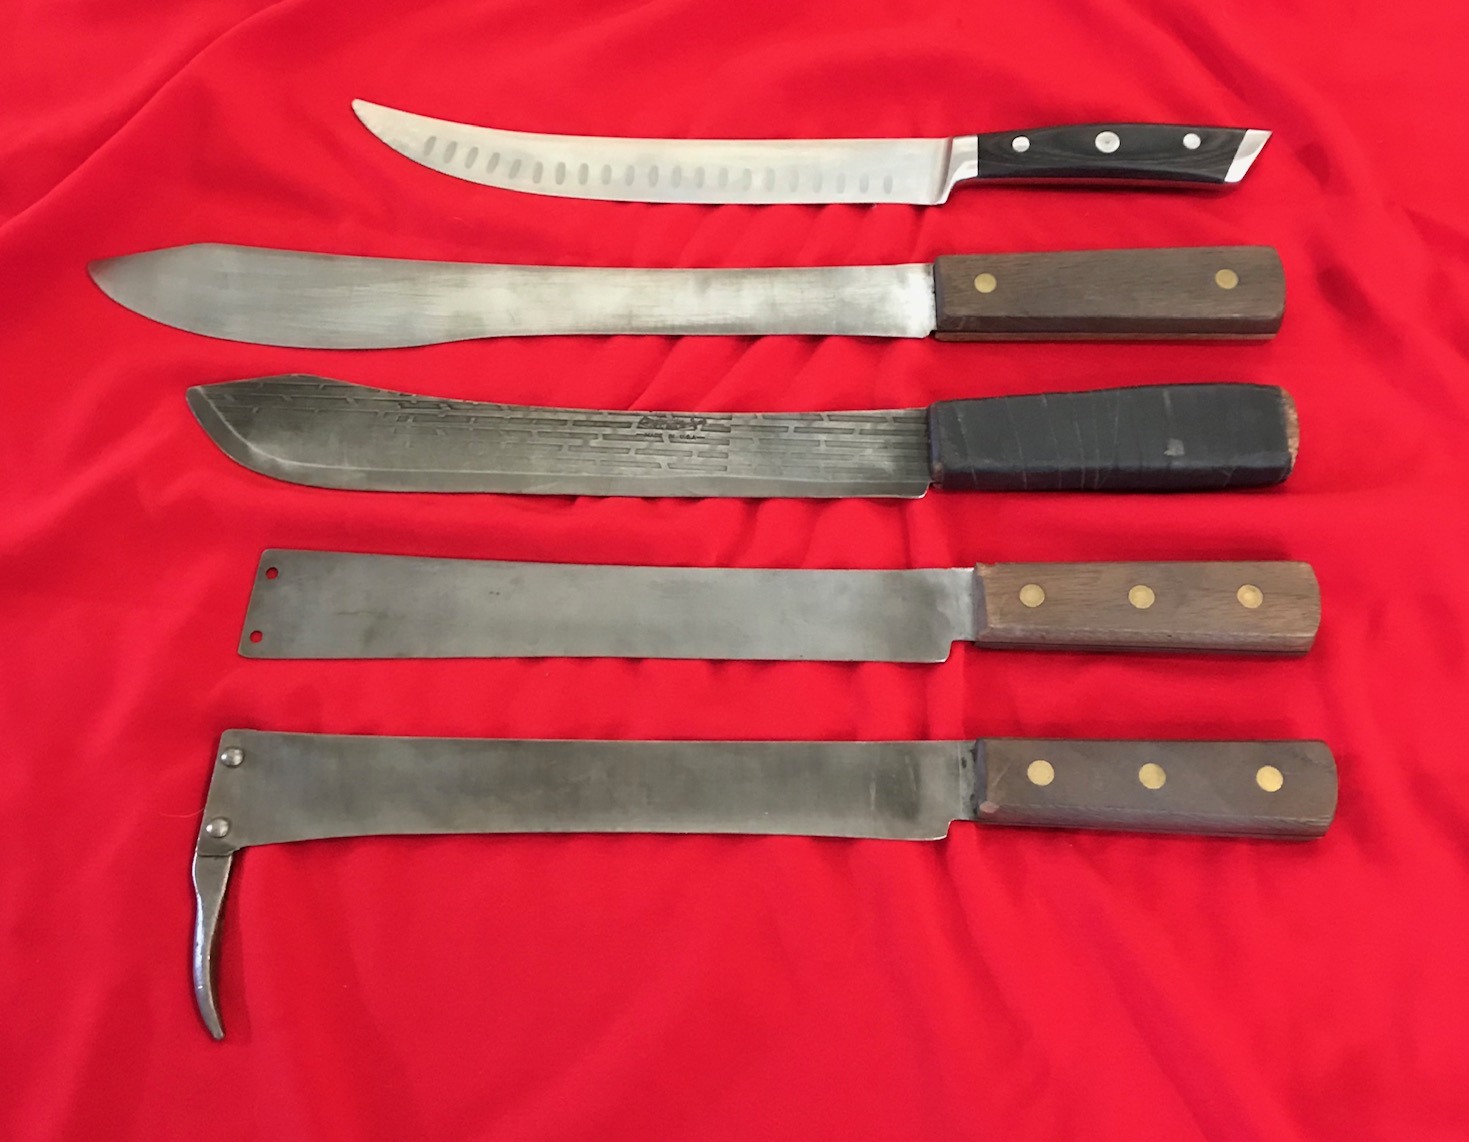 https://preferredarms.com/wp-content/uploads/2018/10/Large-kitchen-knives.jpg